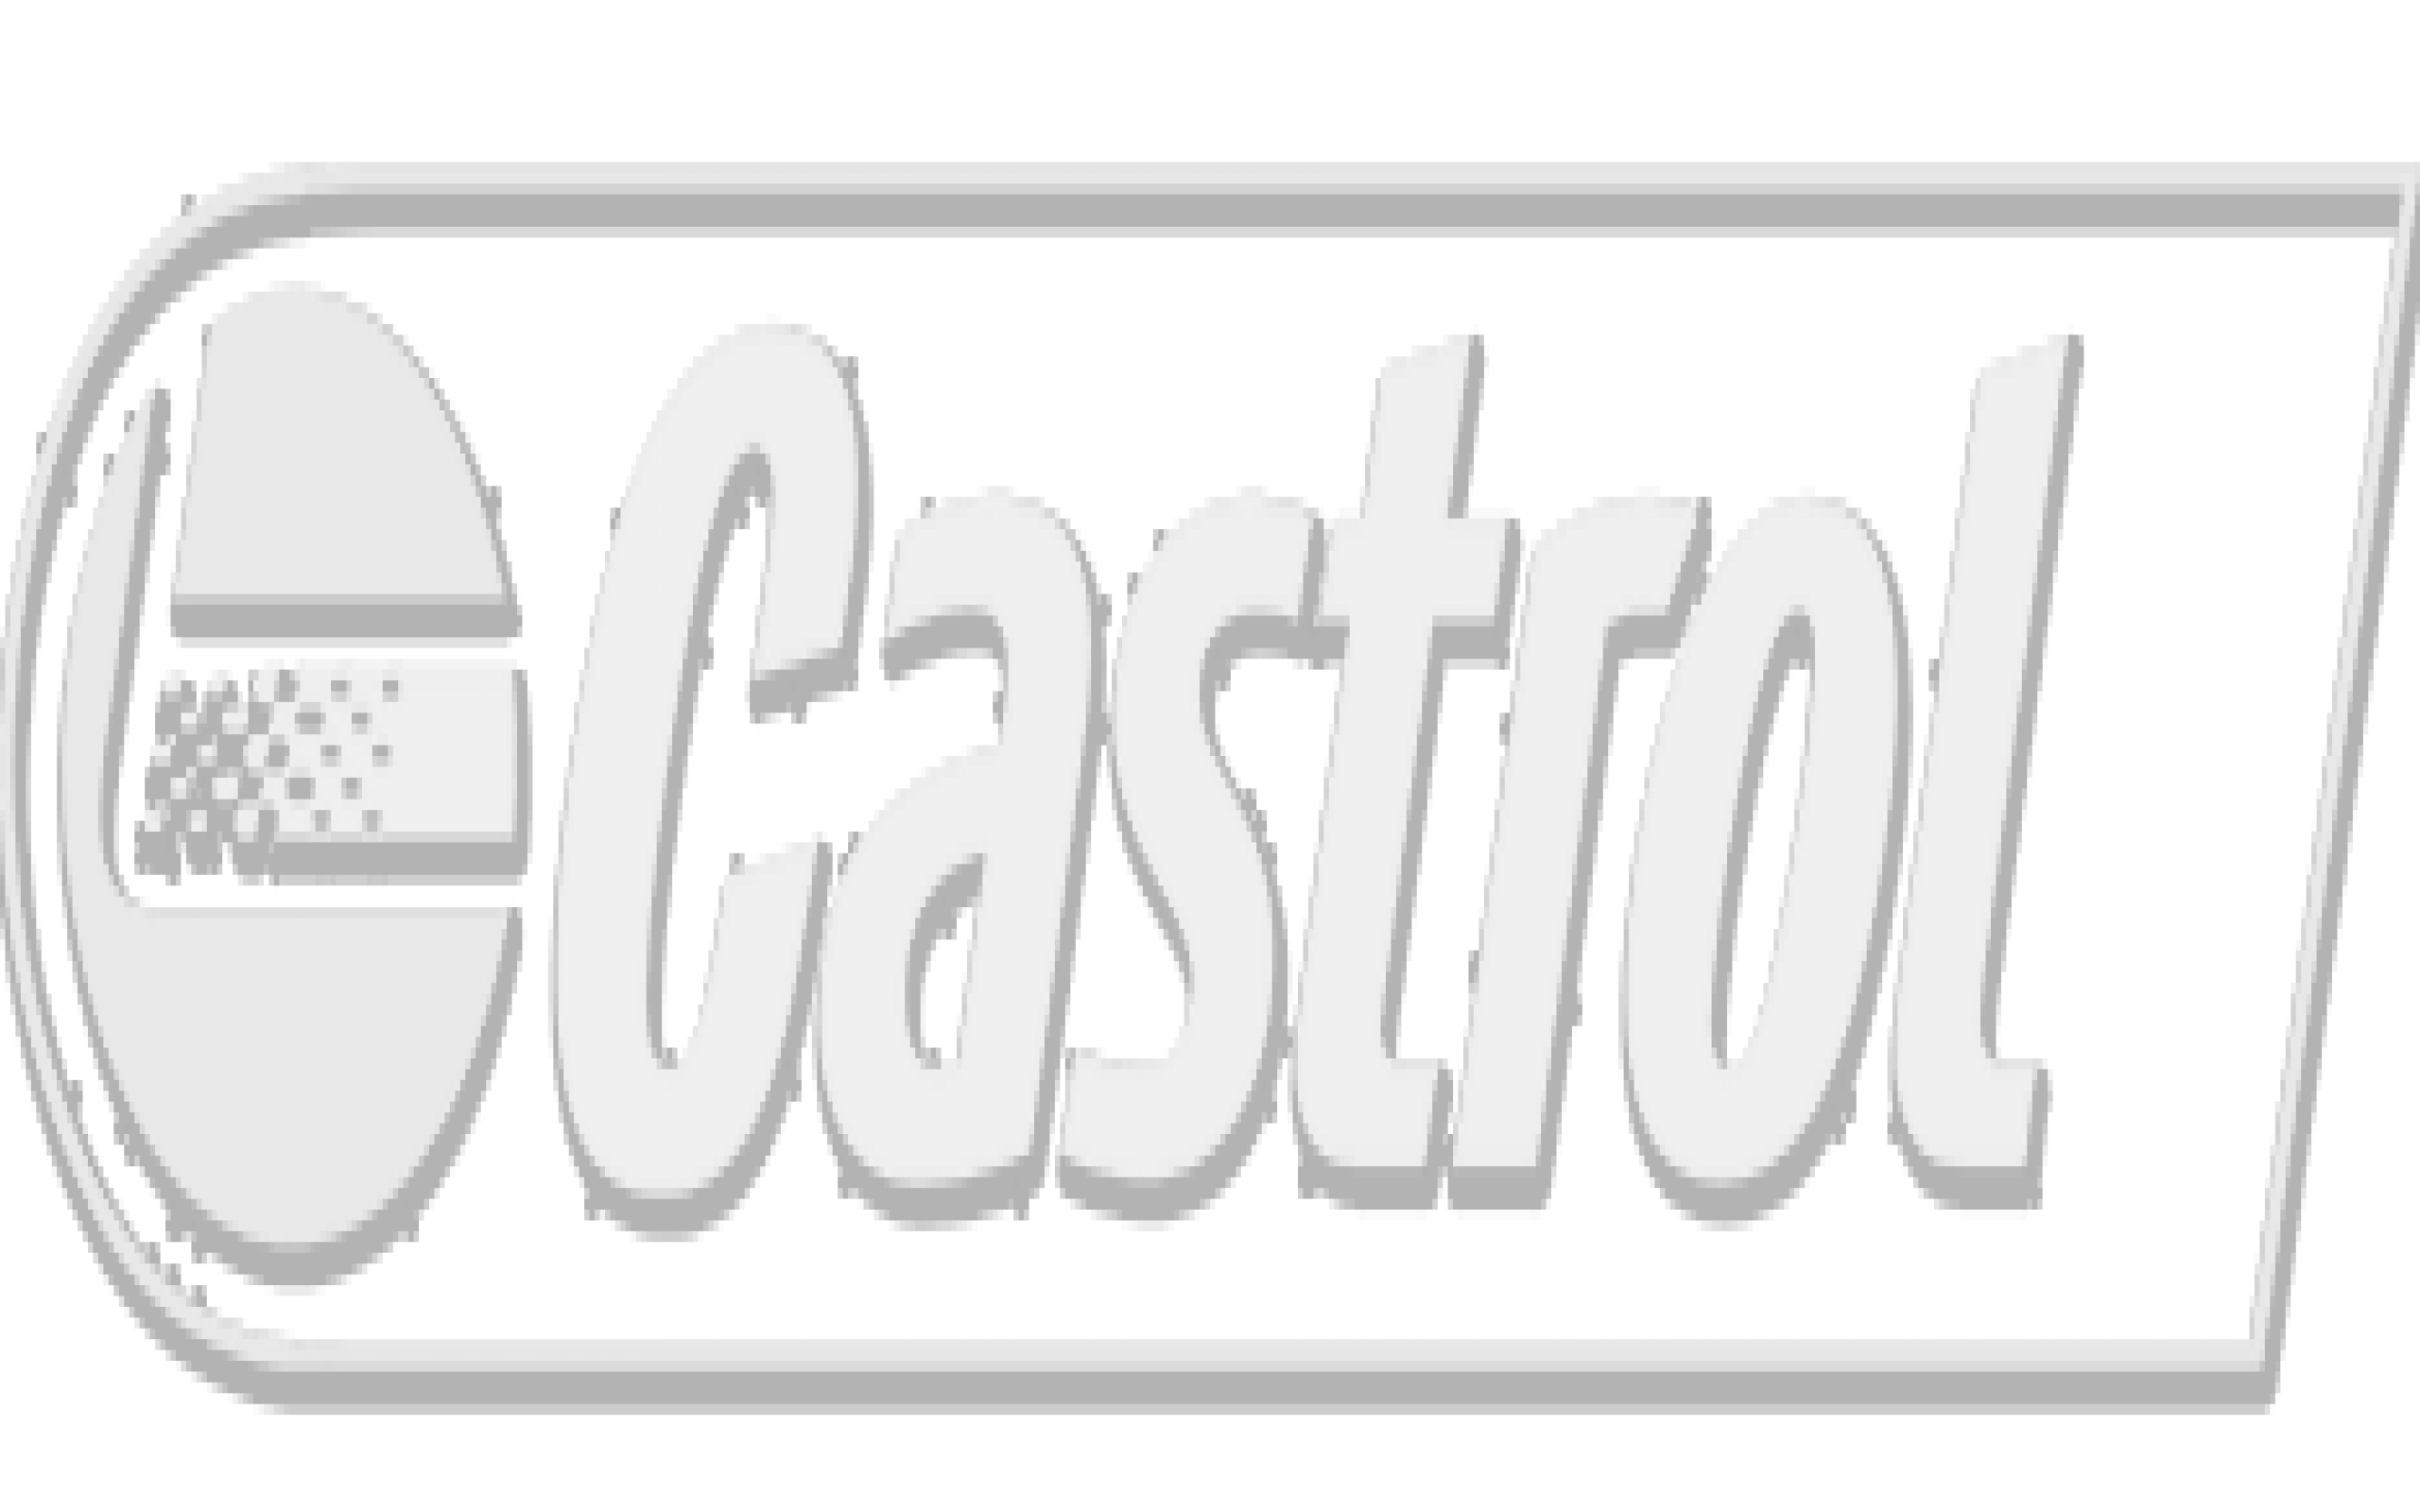 castrol-logo.png